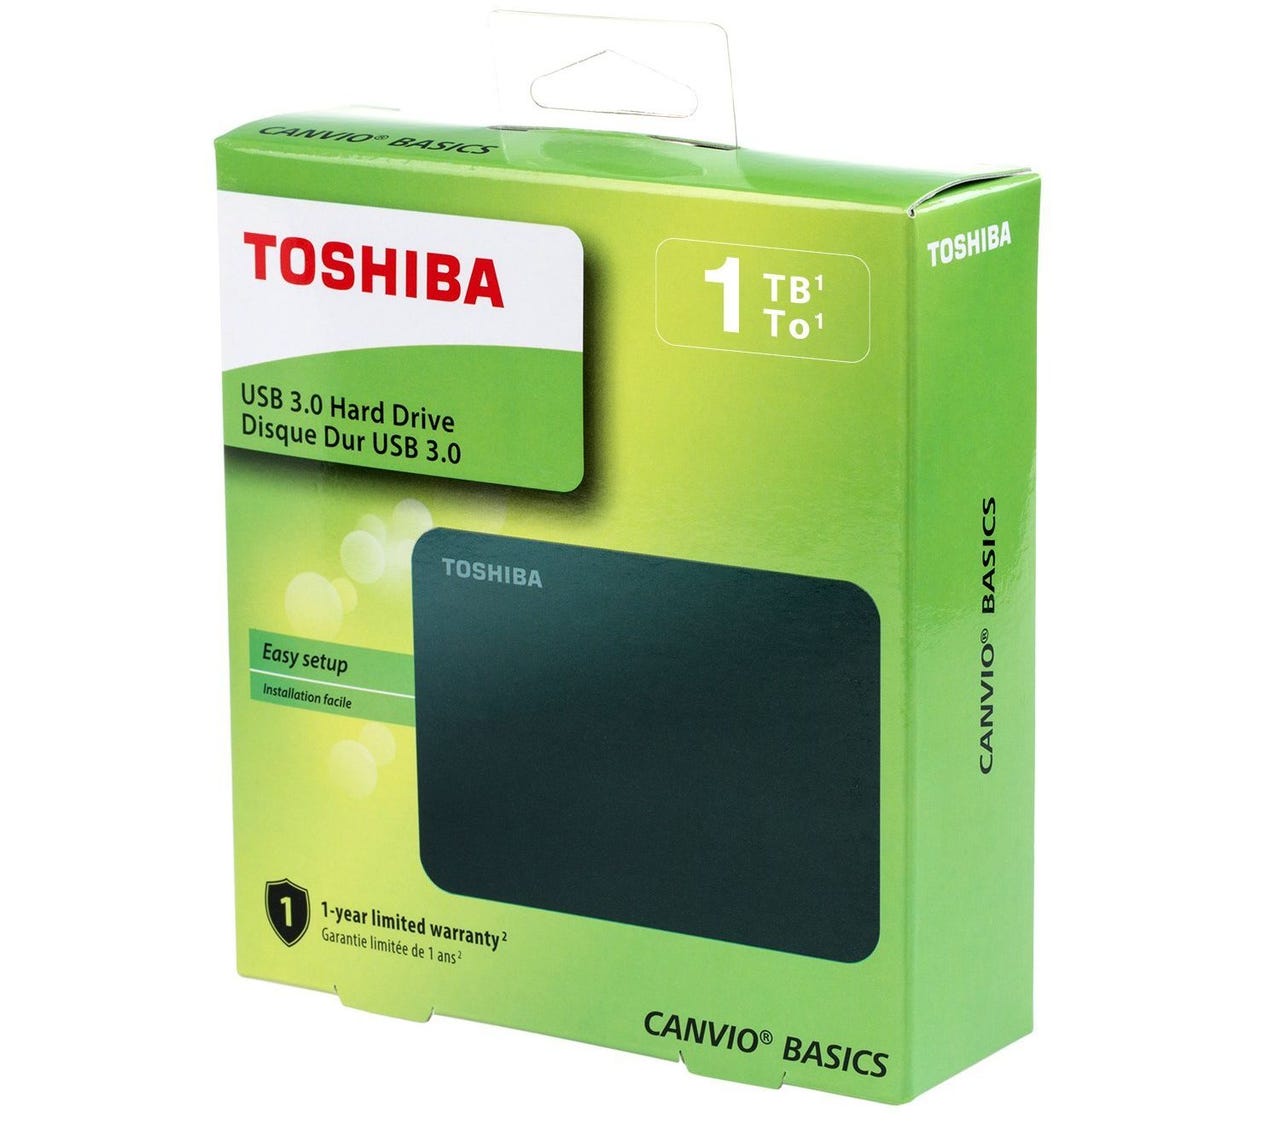 toshiba-canvio-basics-1tb-in-box.jpg